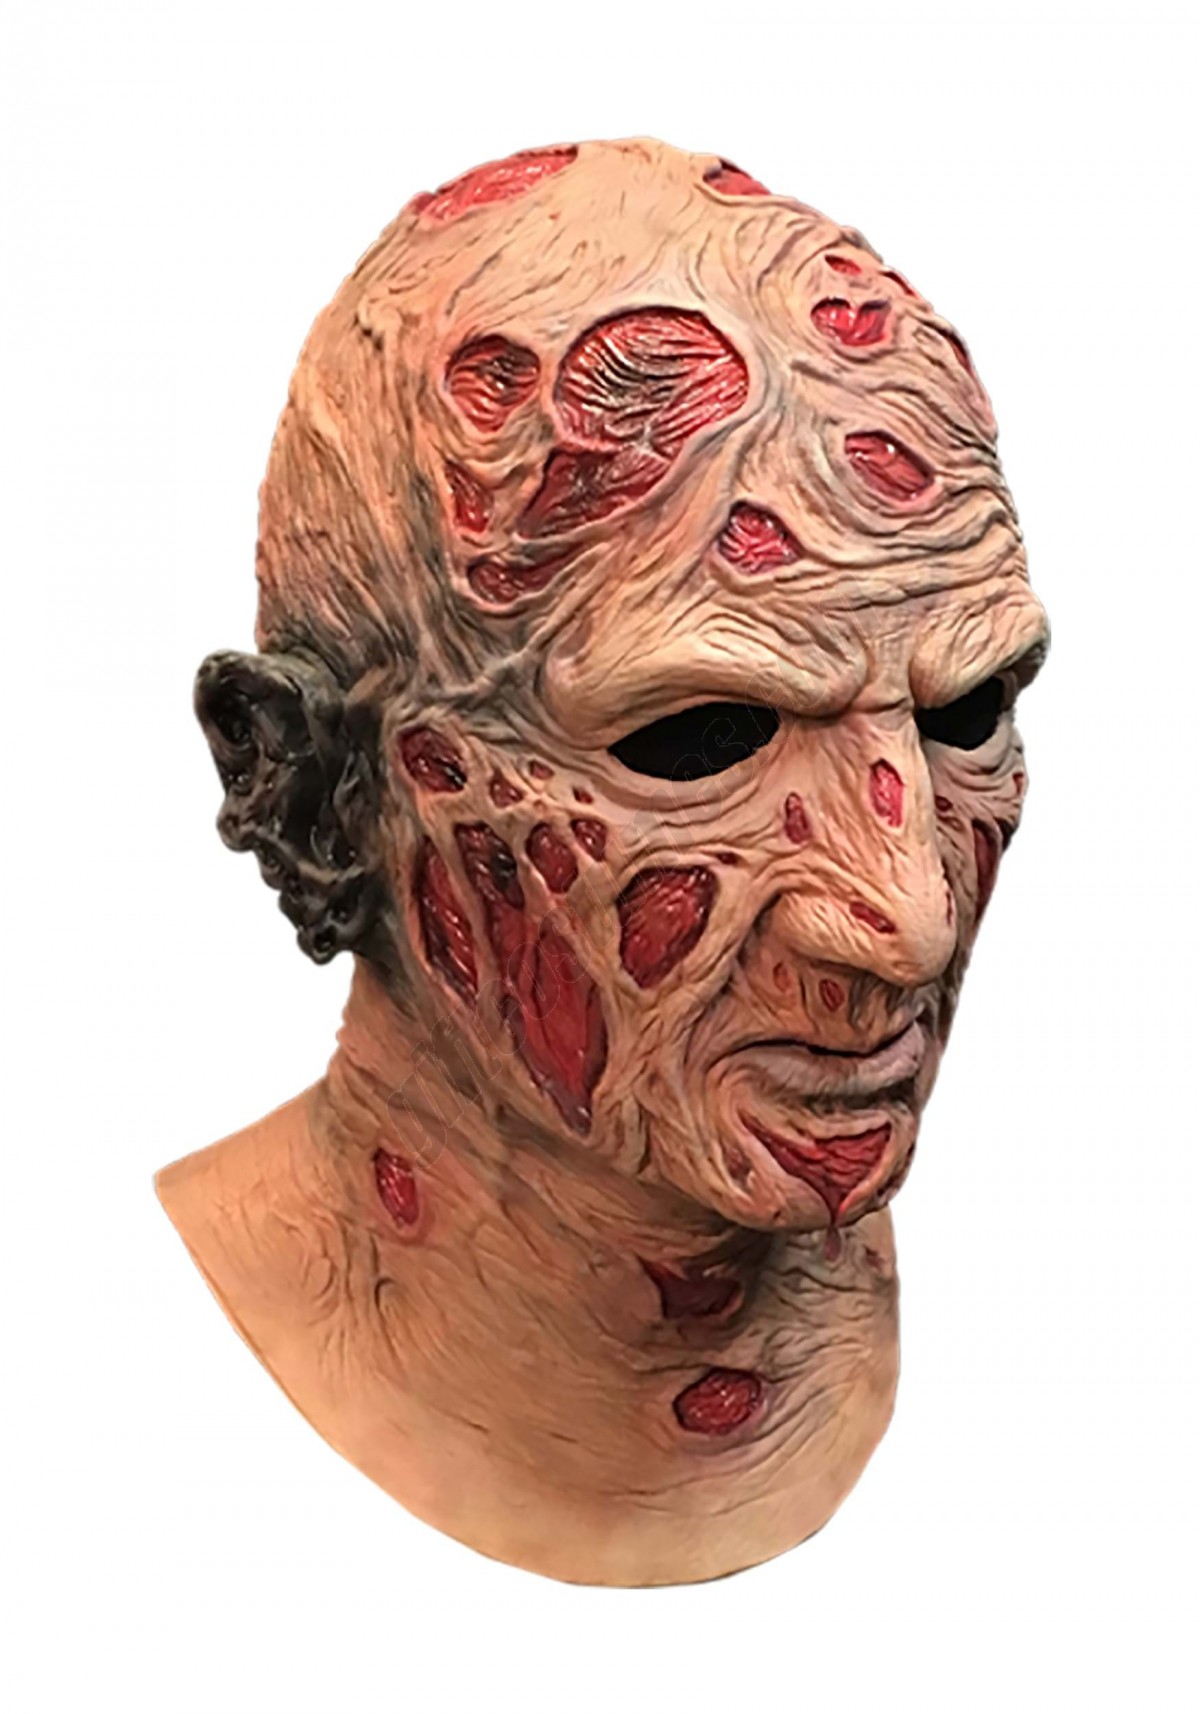 Springwood Slasher Mask from A Nightmare on Elm Street  Promotions - -3